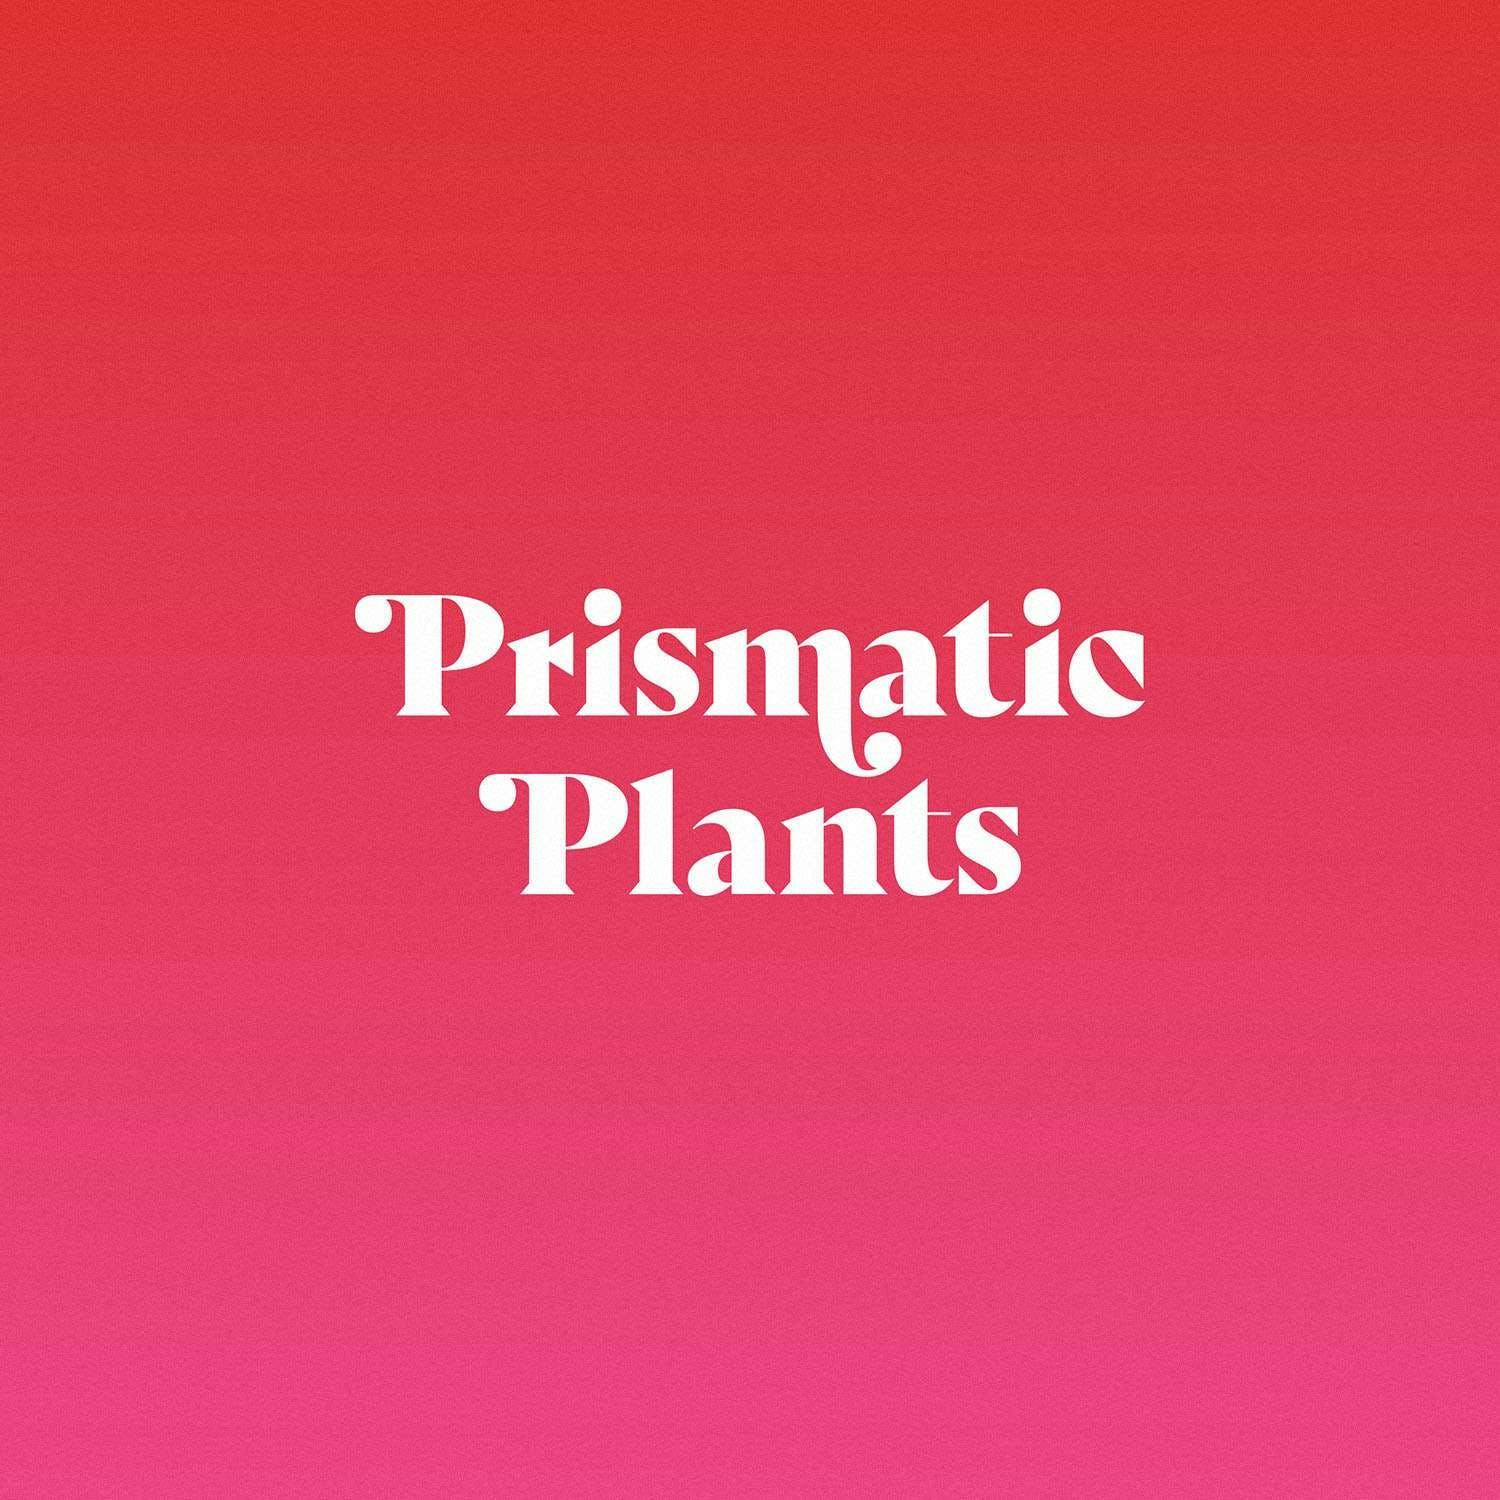 Prismatic Plants - Brand Identity, Packaging Design, Illustration, and Website Design